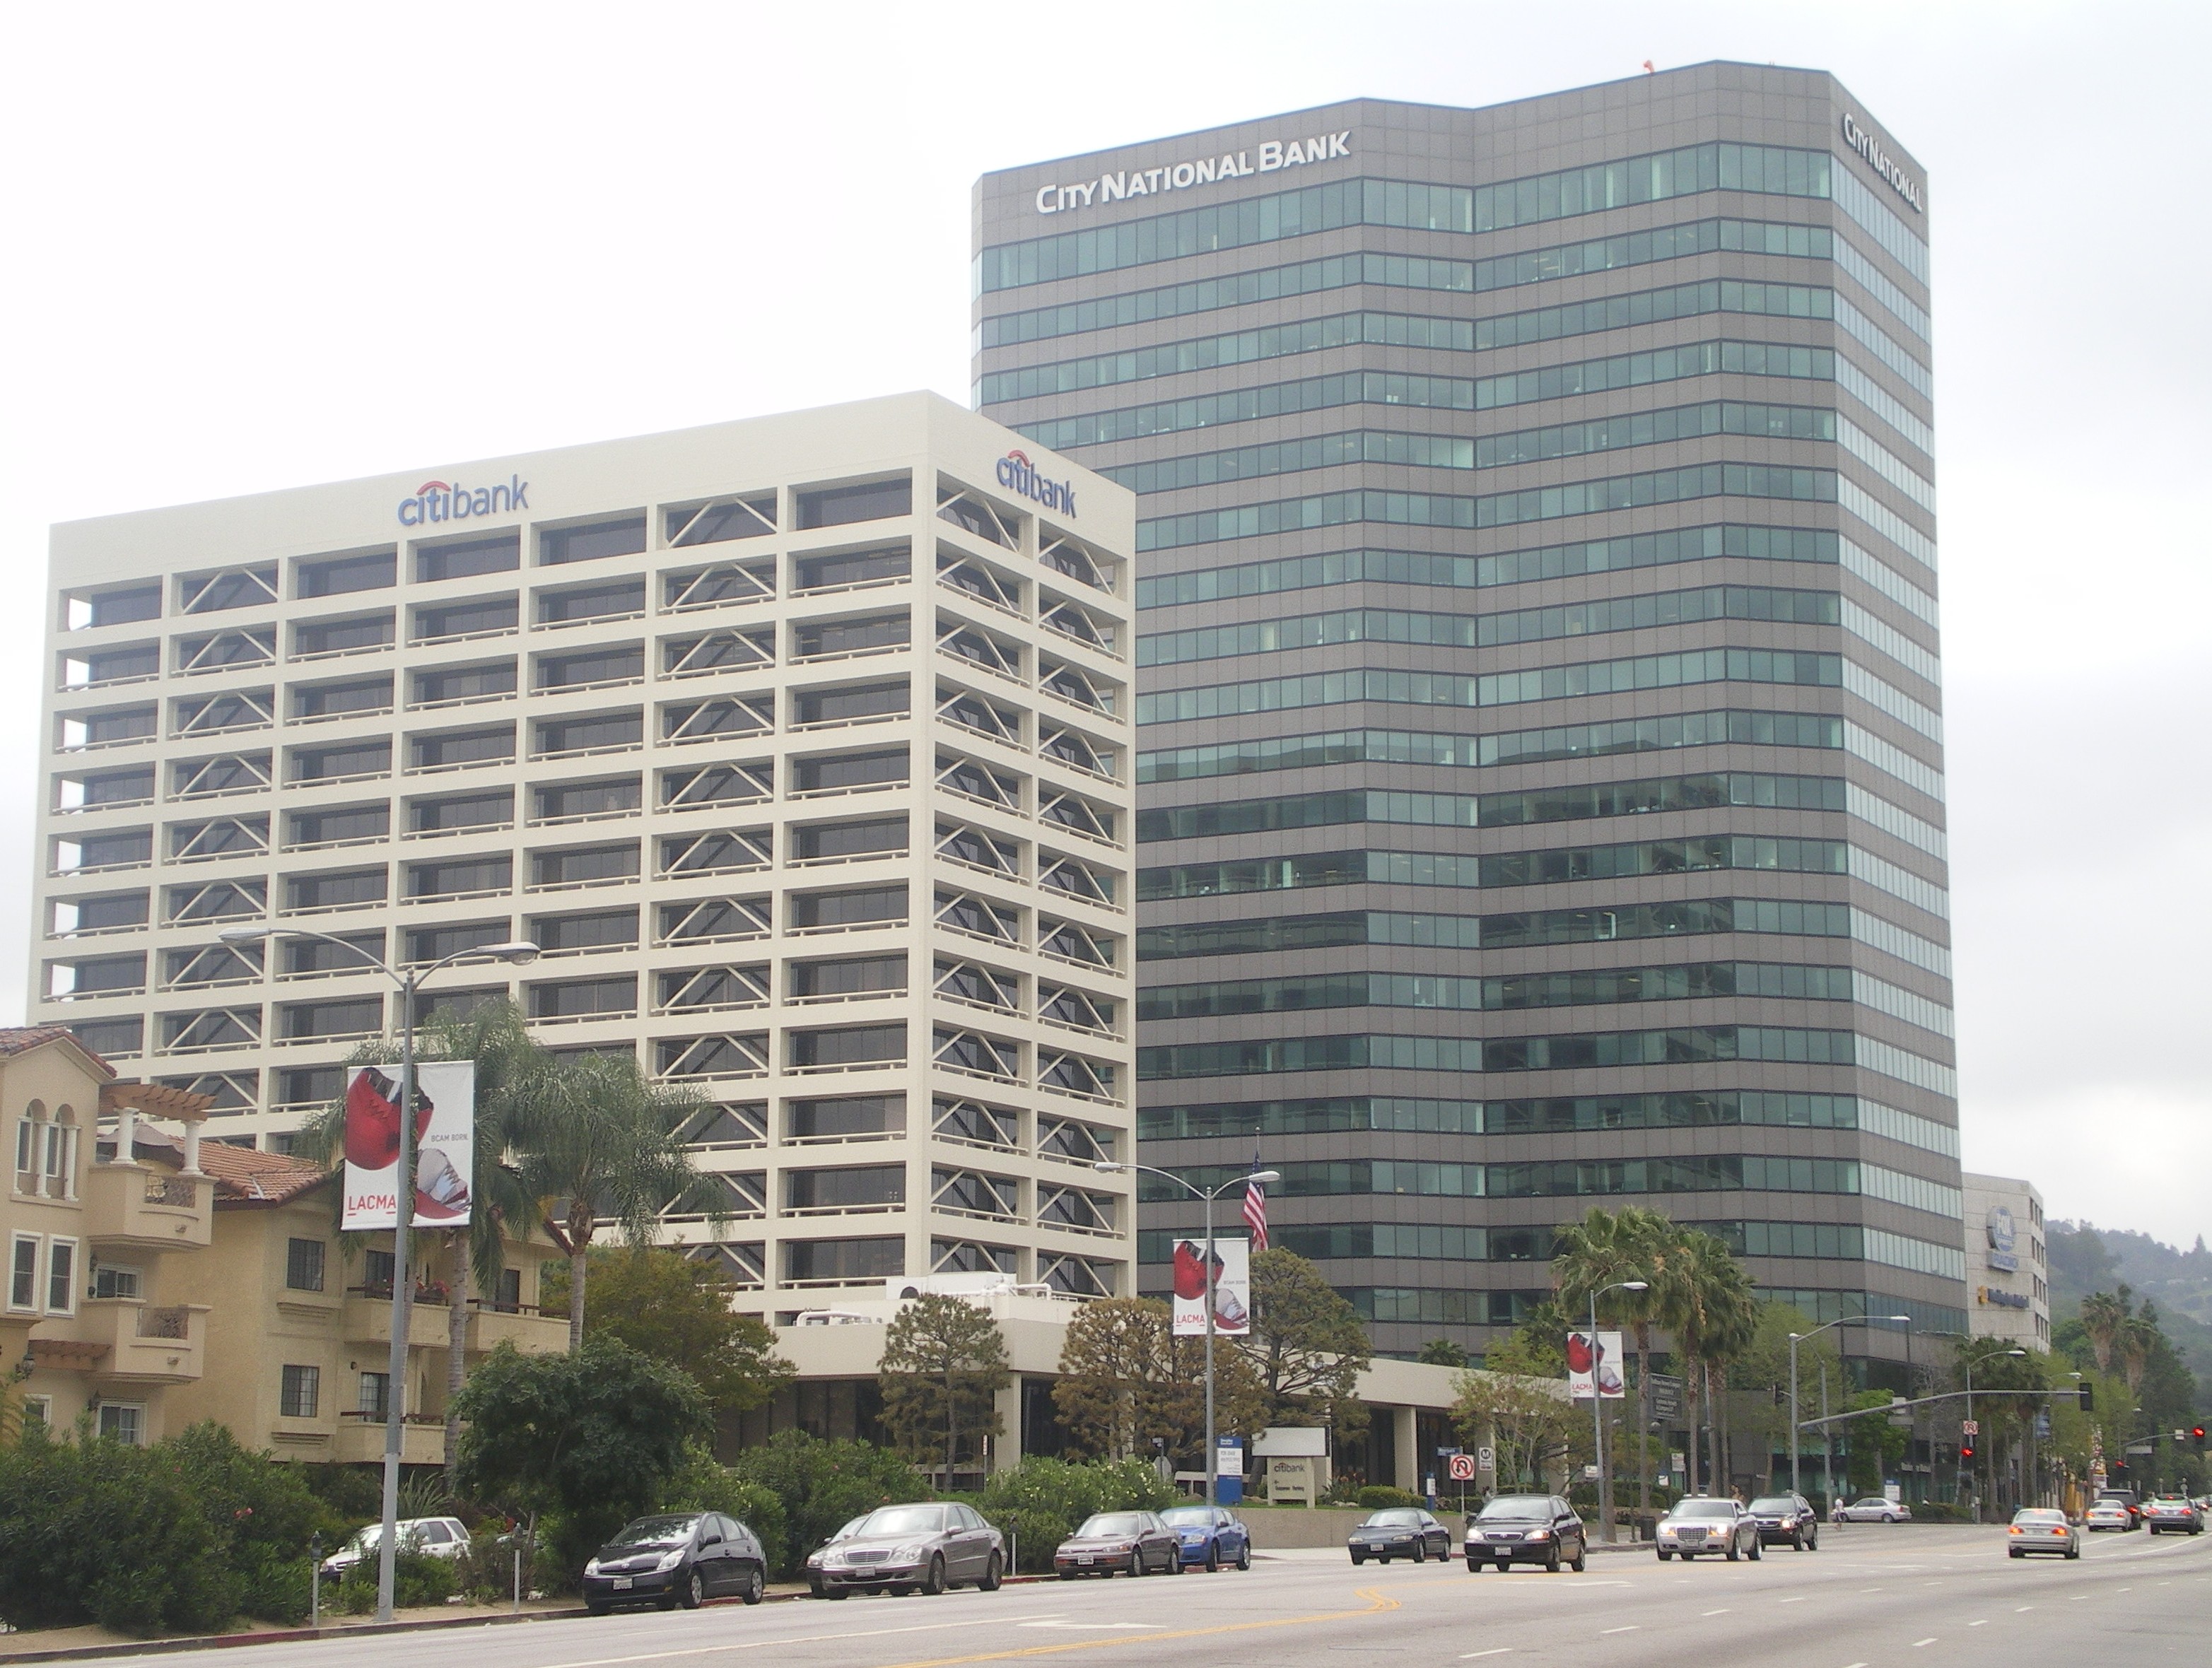 Citibank_and_City_National_Bank_Buildings,_Ventura_&_Sepulveda,_Sherman_Oaks